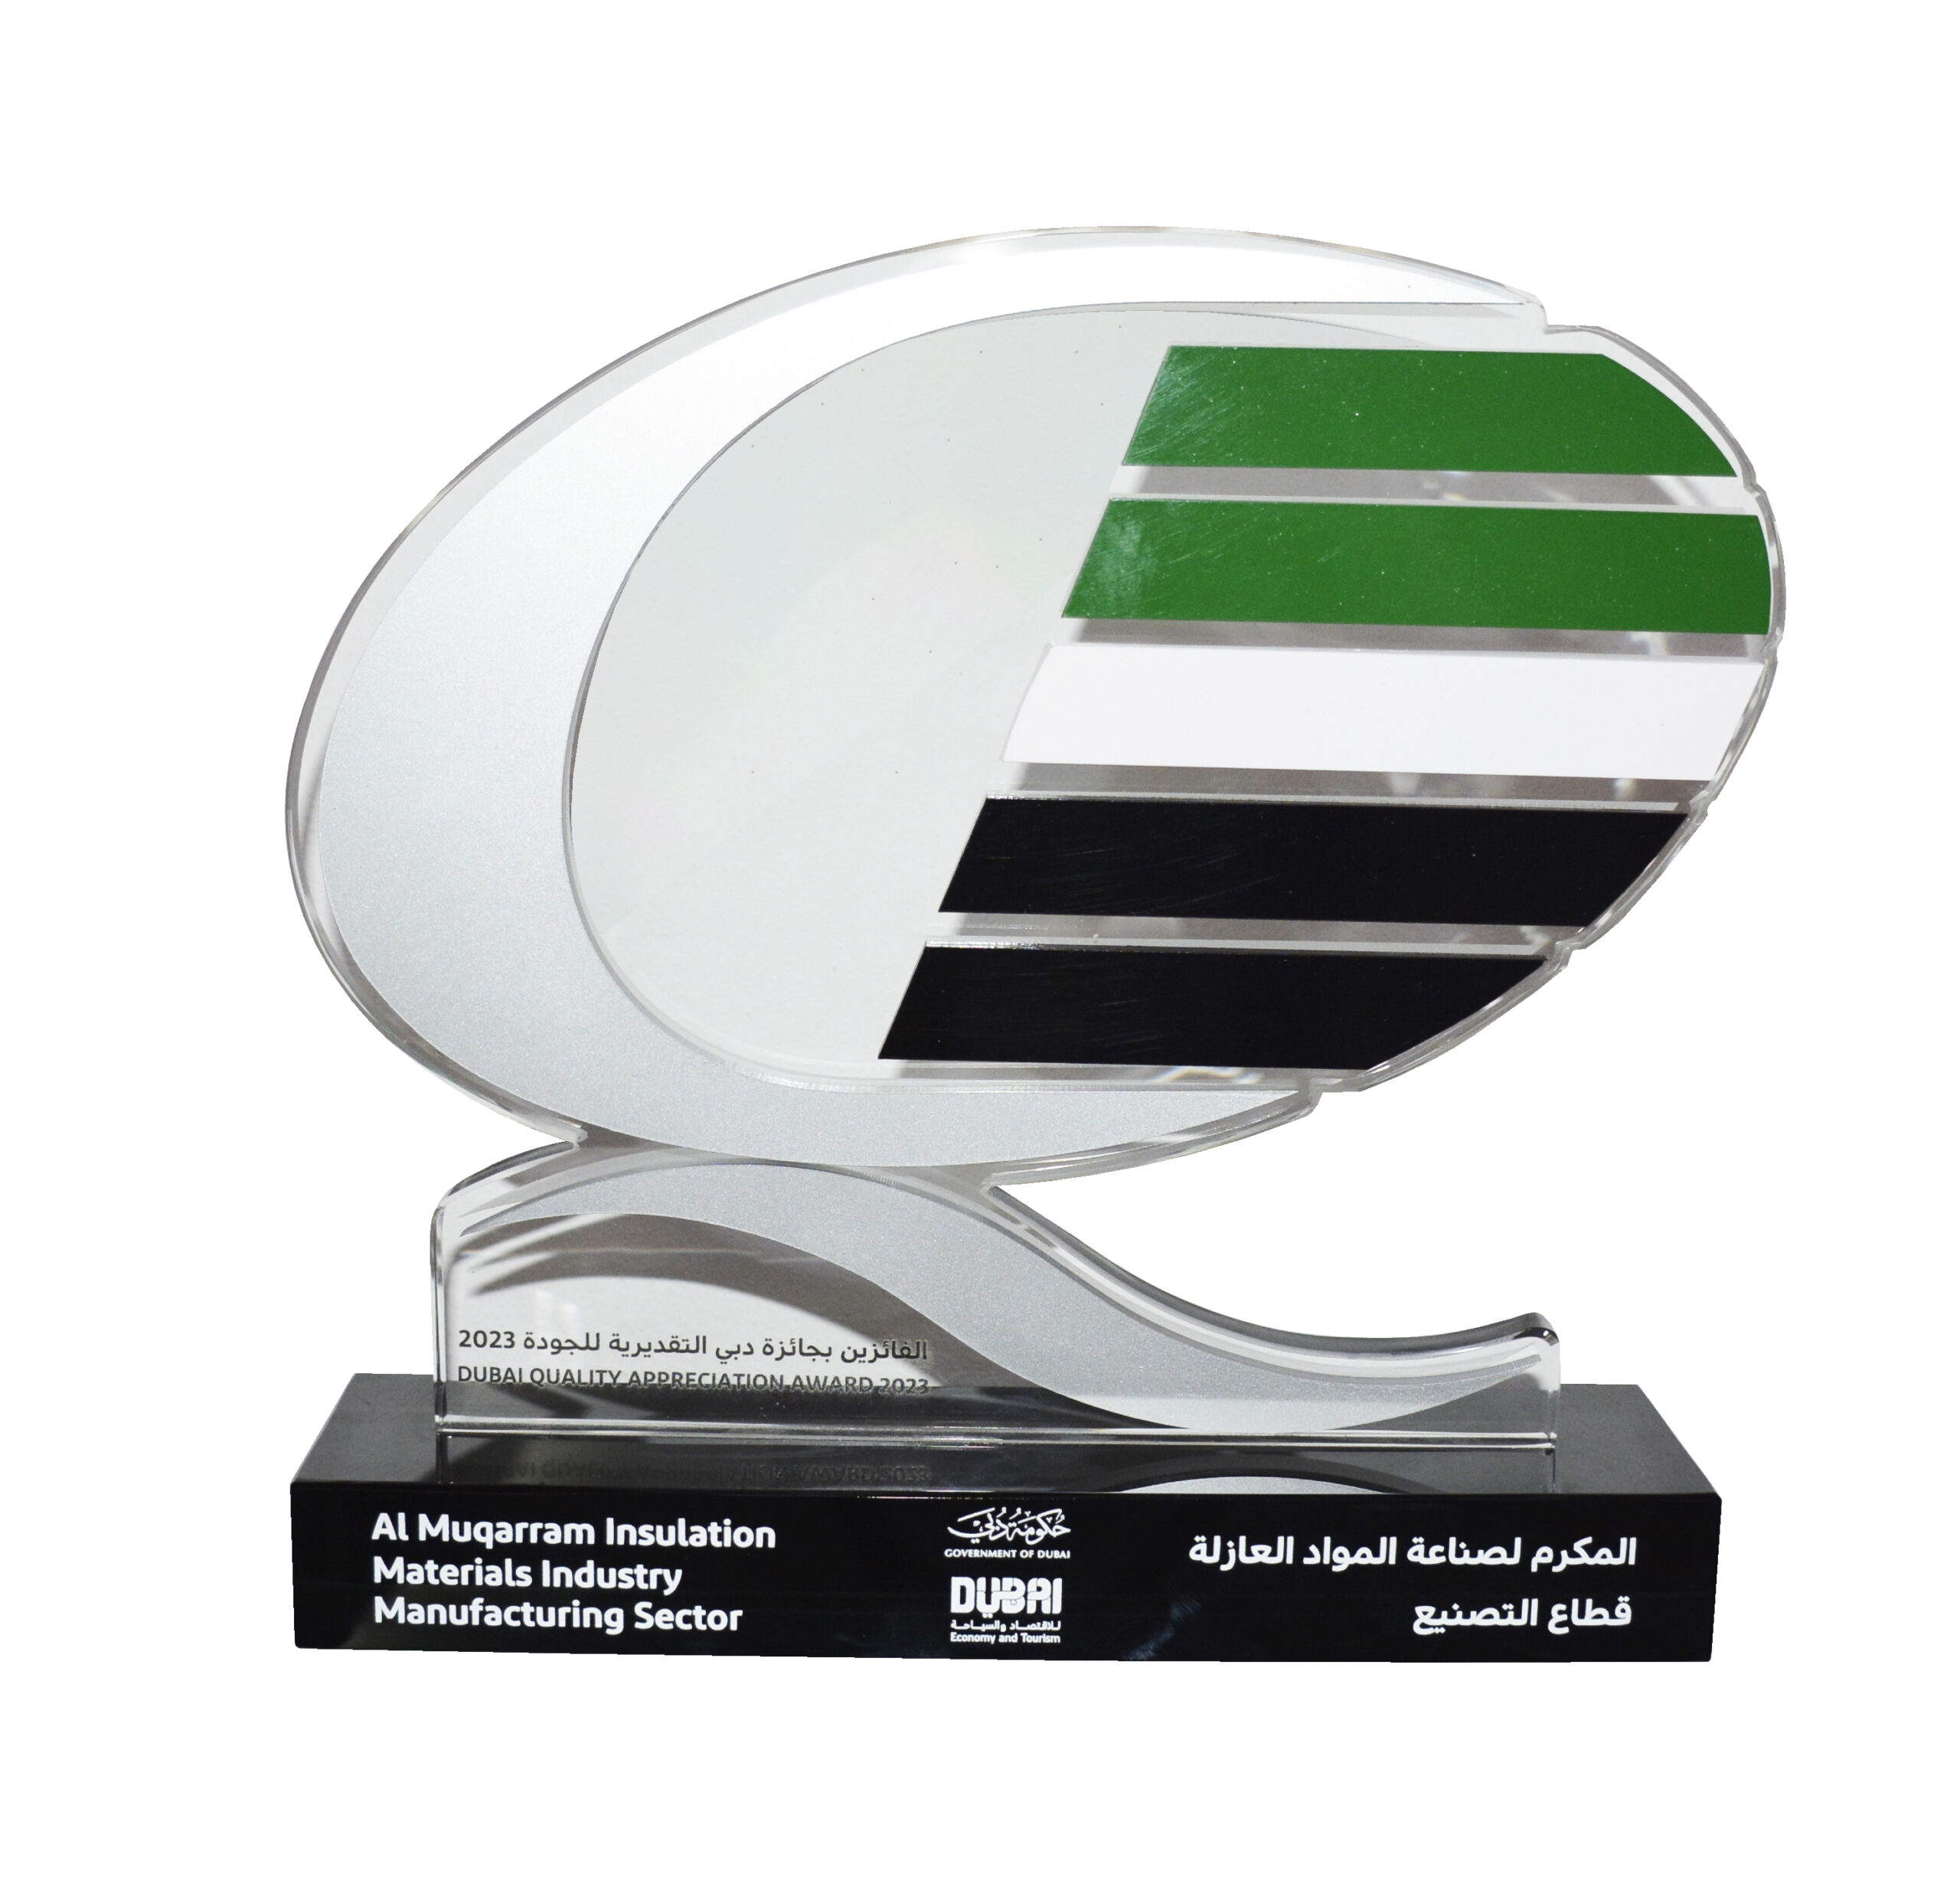 Dubai-quality-apprication-certificate-Award